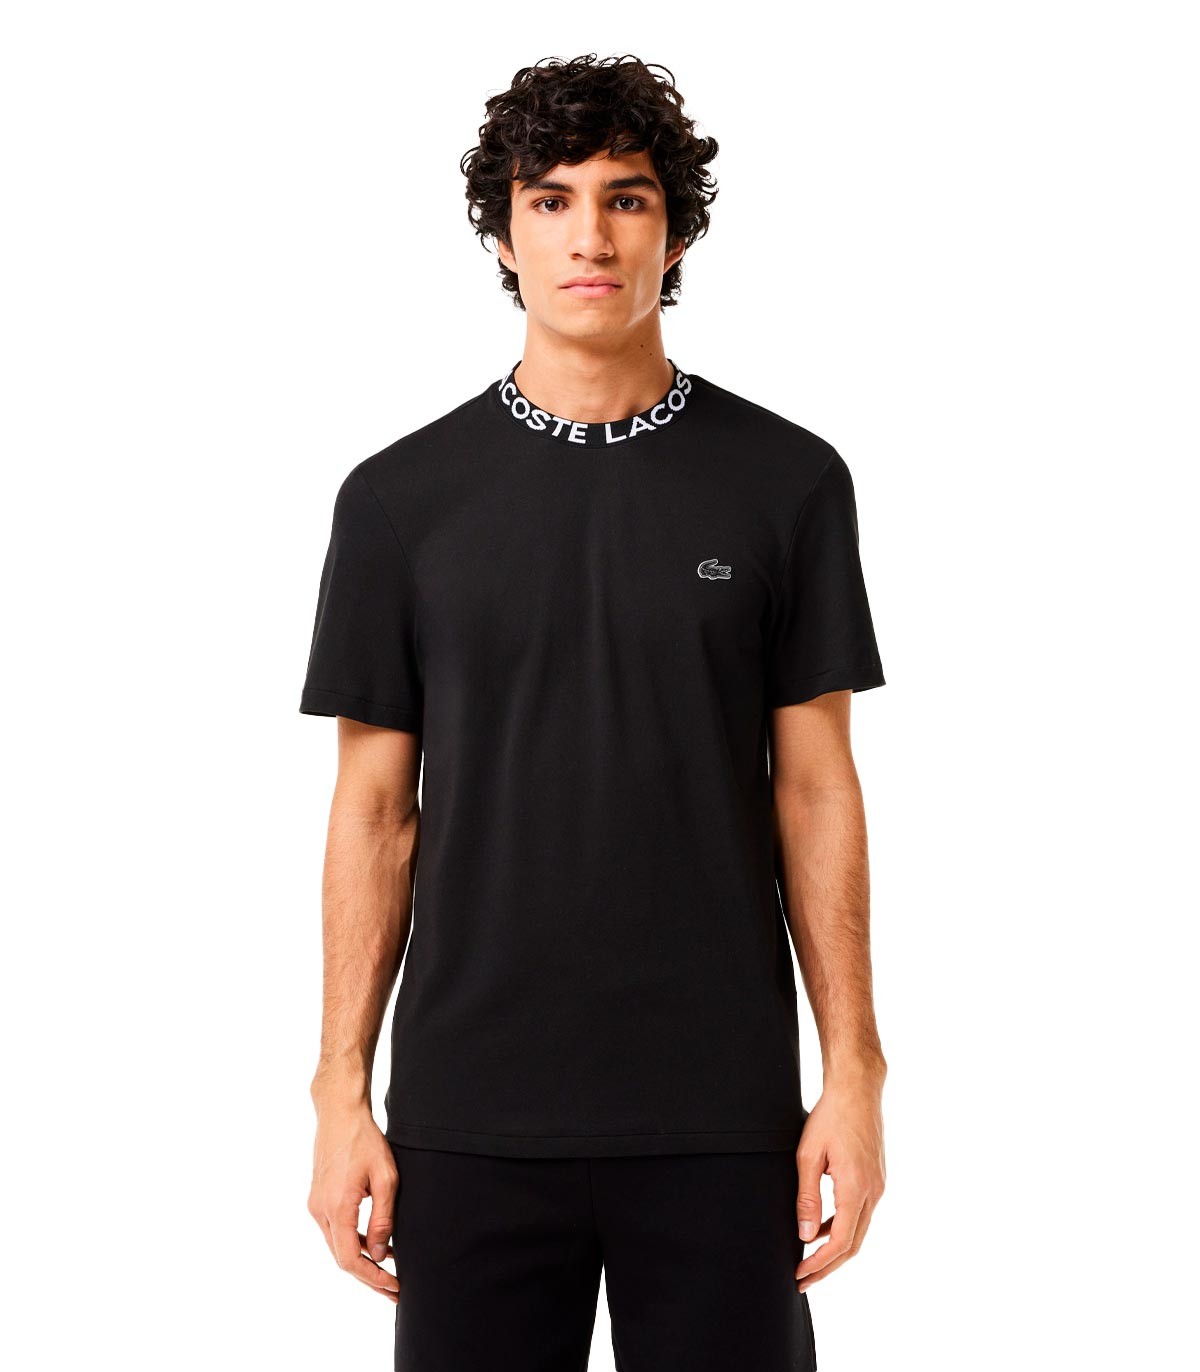 Lacoste - Camiseta Ultralight - Negro